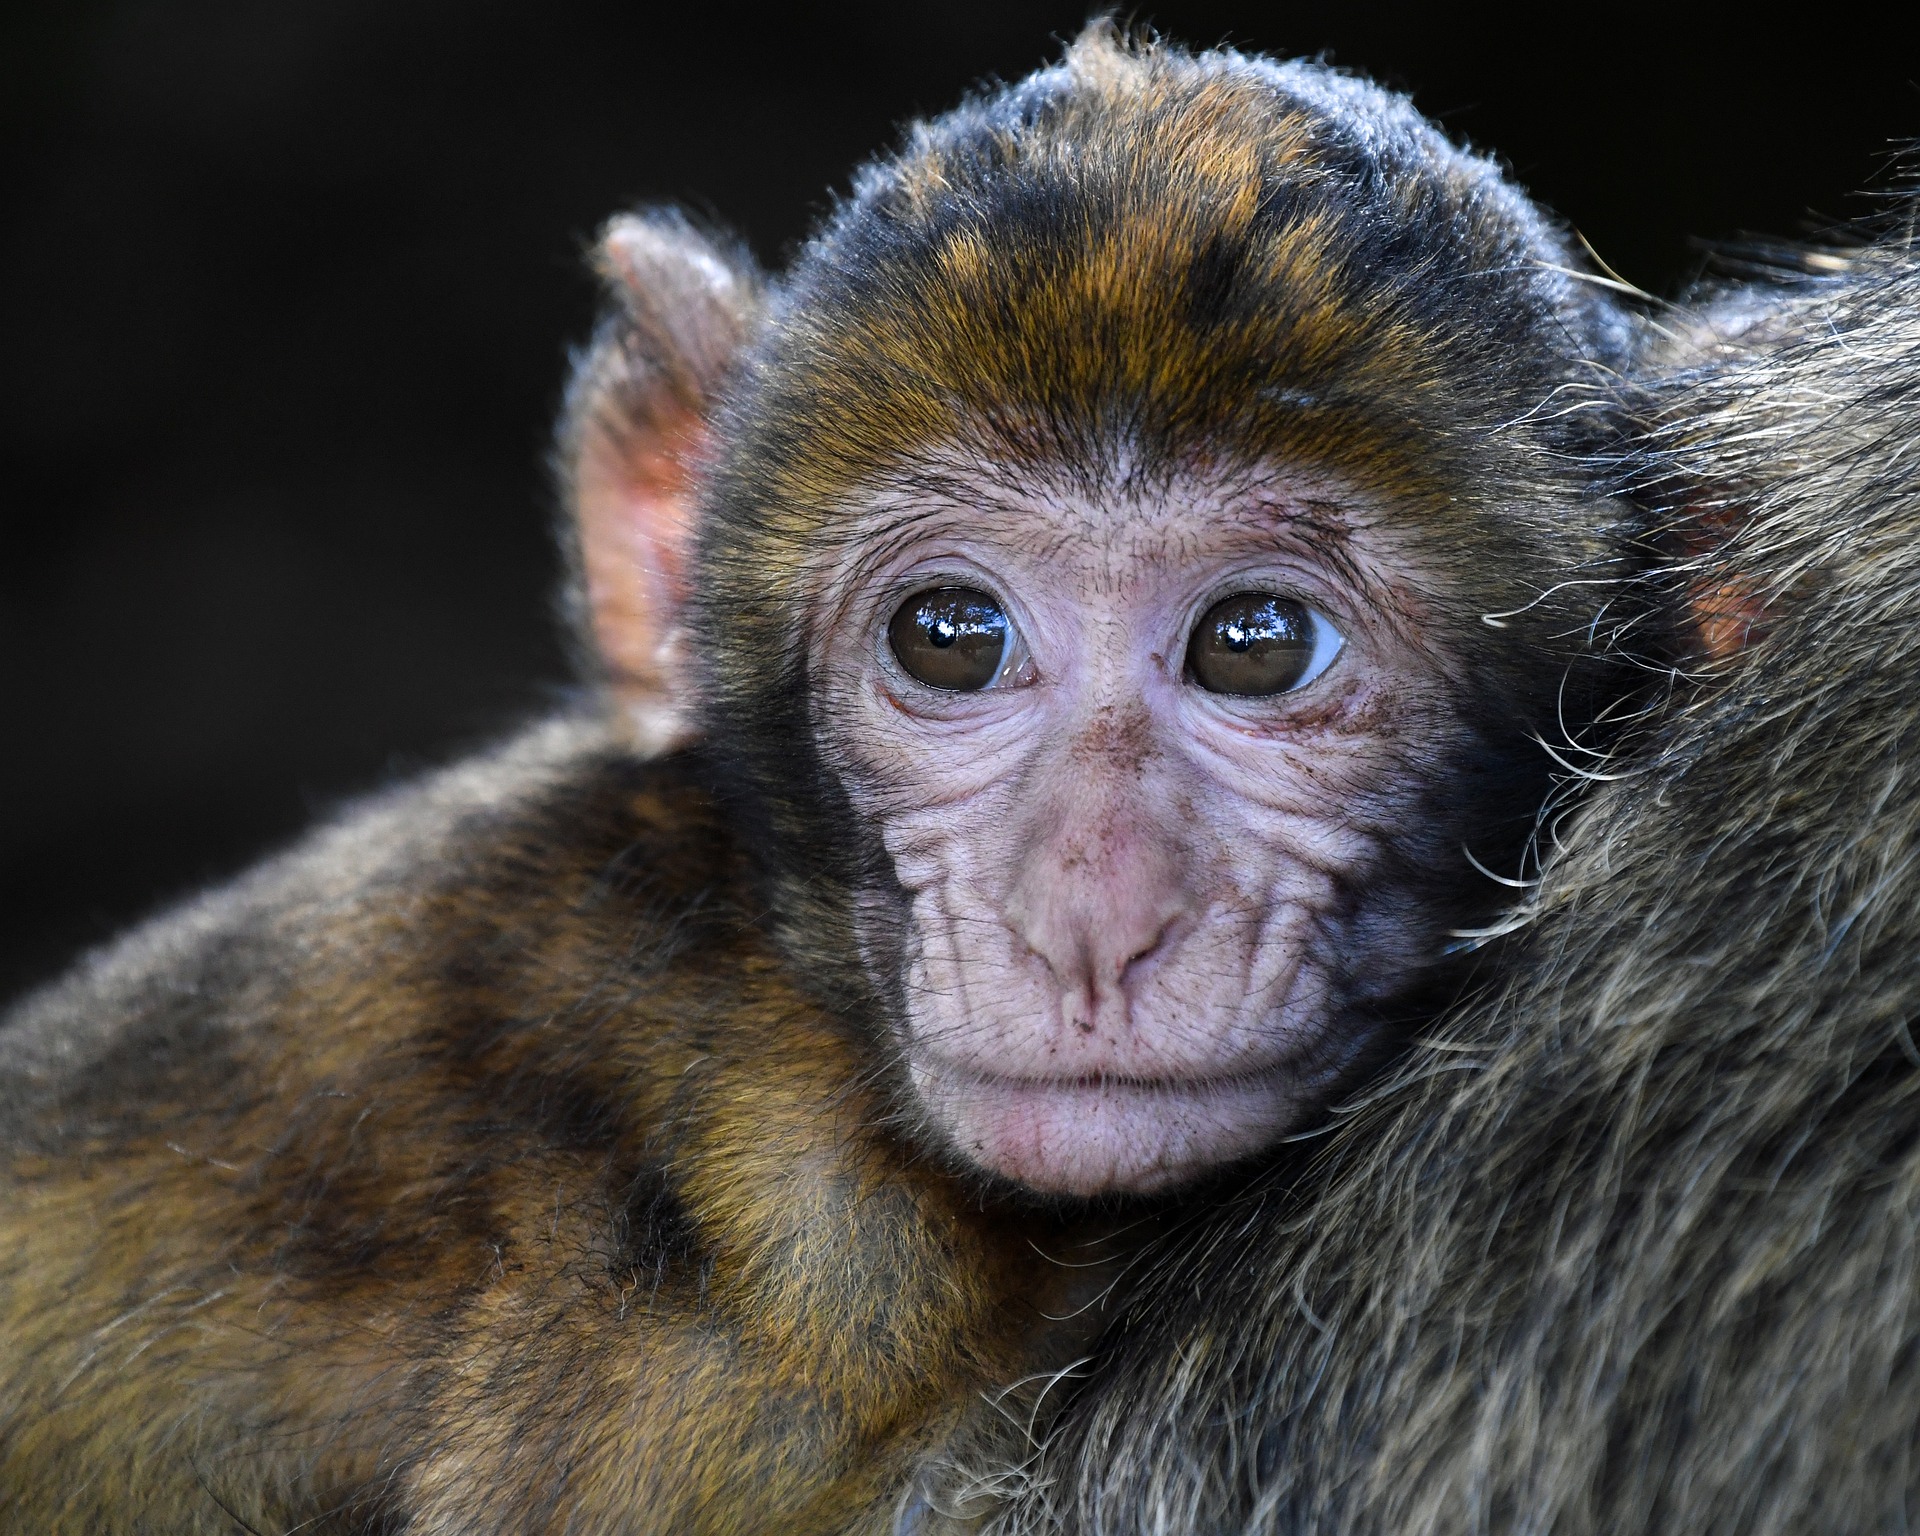 Monkey Smiling (Source: Christel SAGNIEZ from Pixabay)